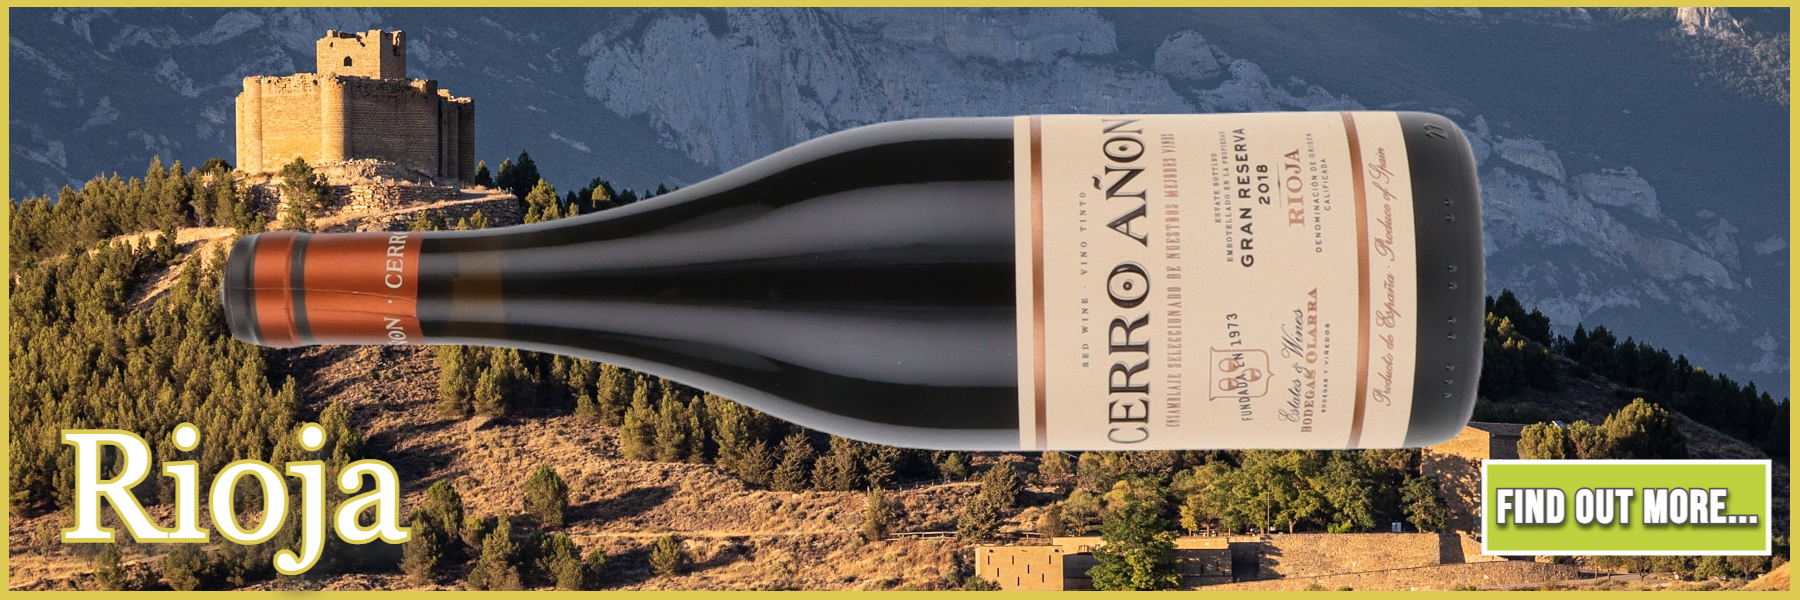 Buy Cerro Anon Rioja from Bodegas Olarra